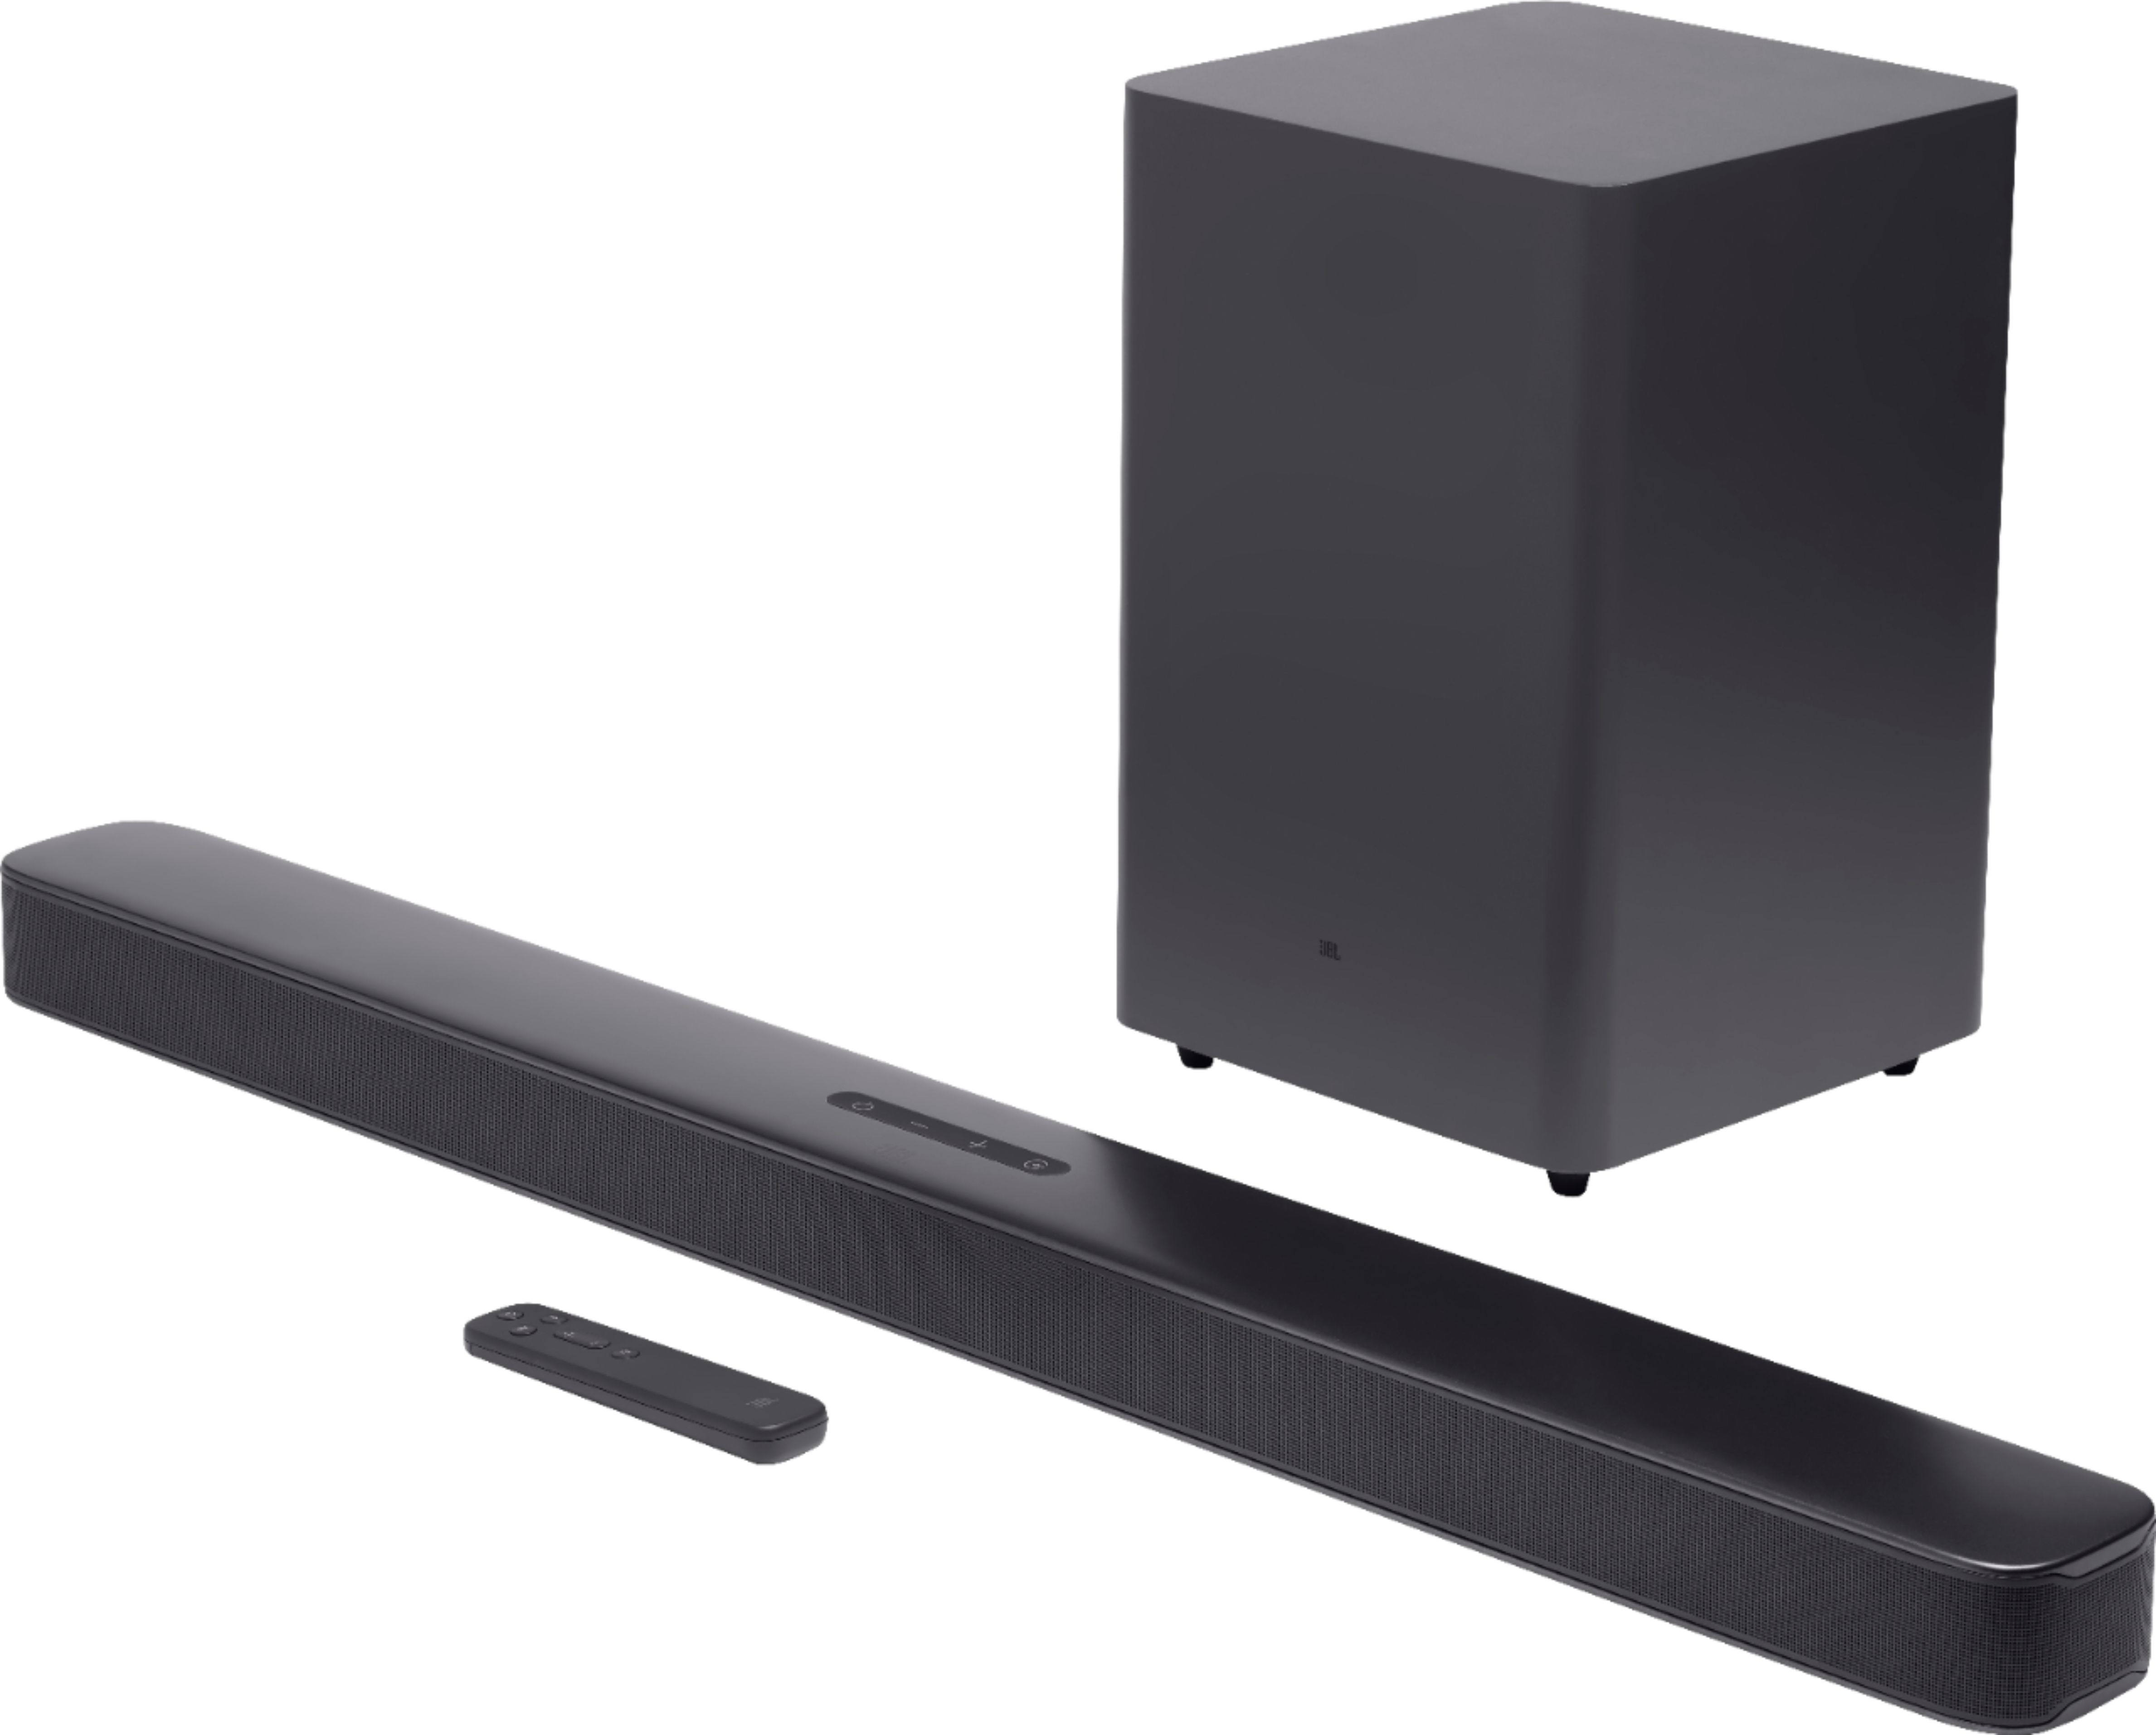 Buy the Bose Companion 3 Series II Multimedia Speaker System IOB